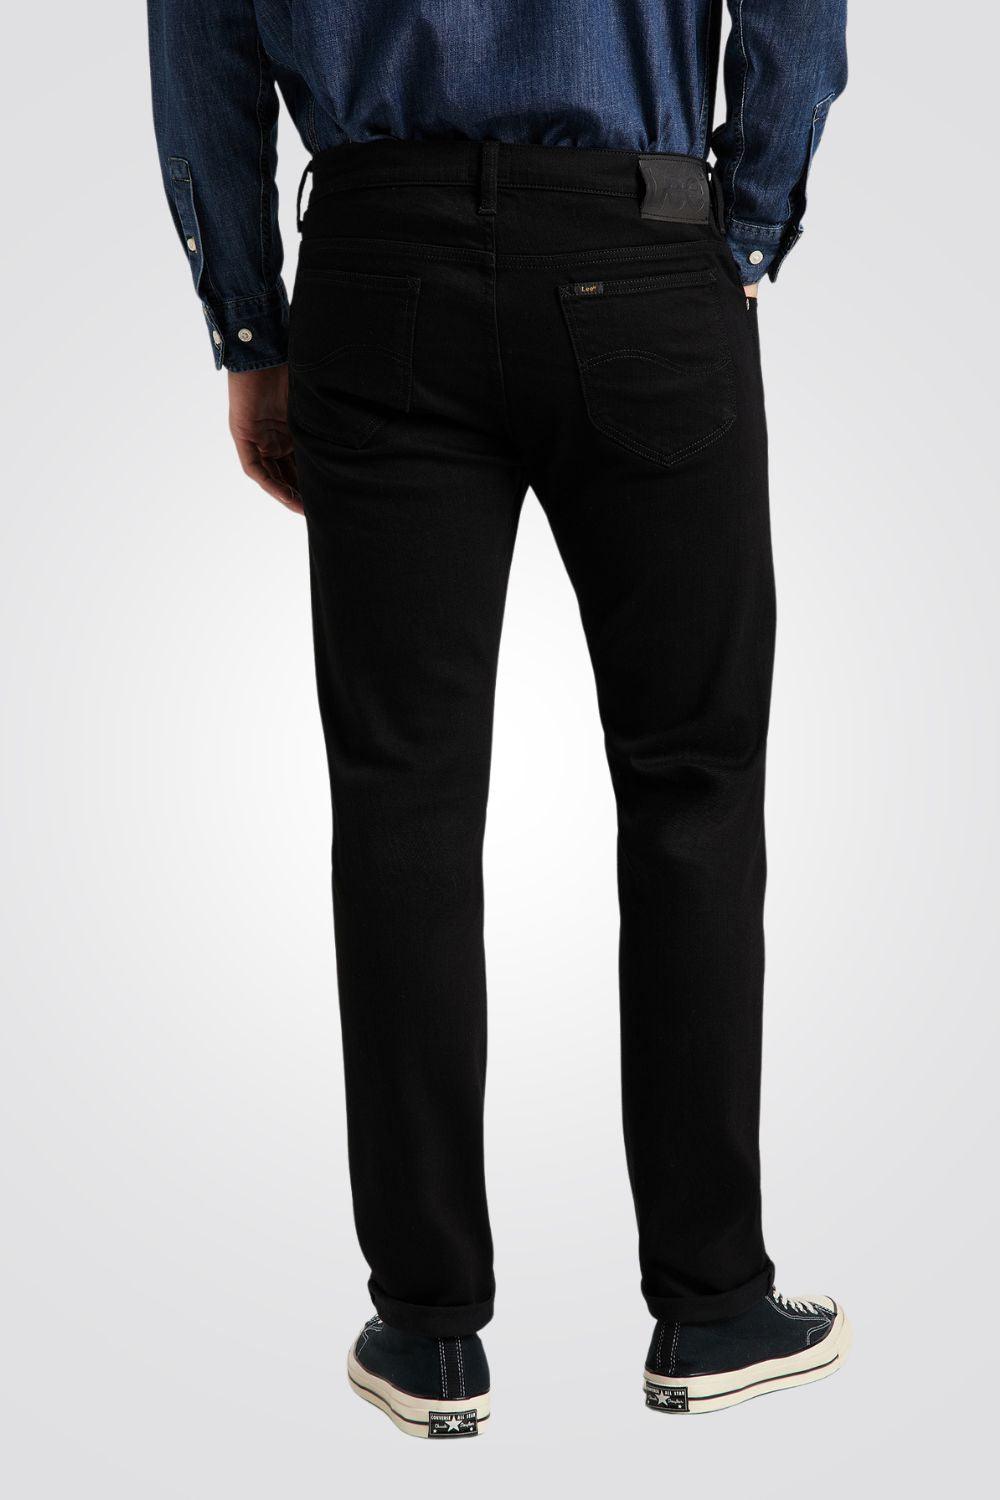 LEE - ג'ינס CLEAN בצבע שחור - MASHBIR//365